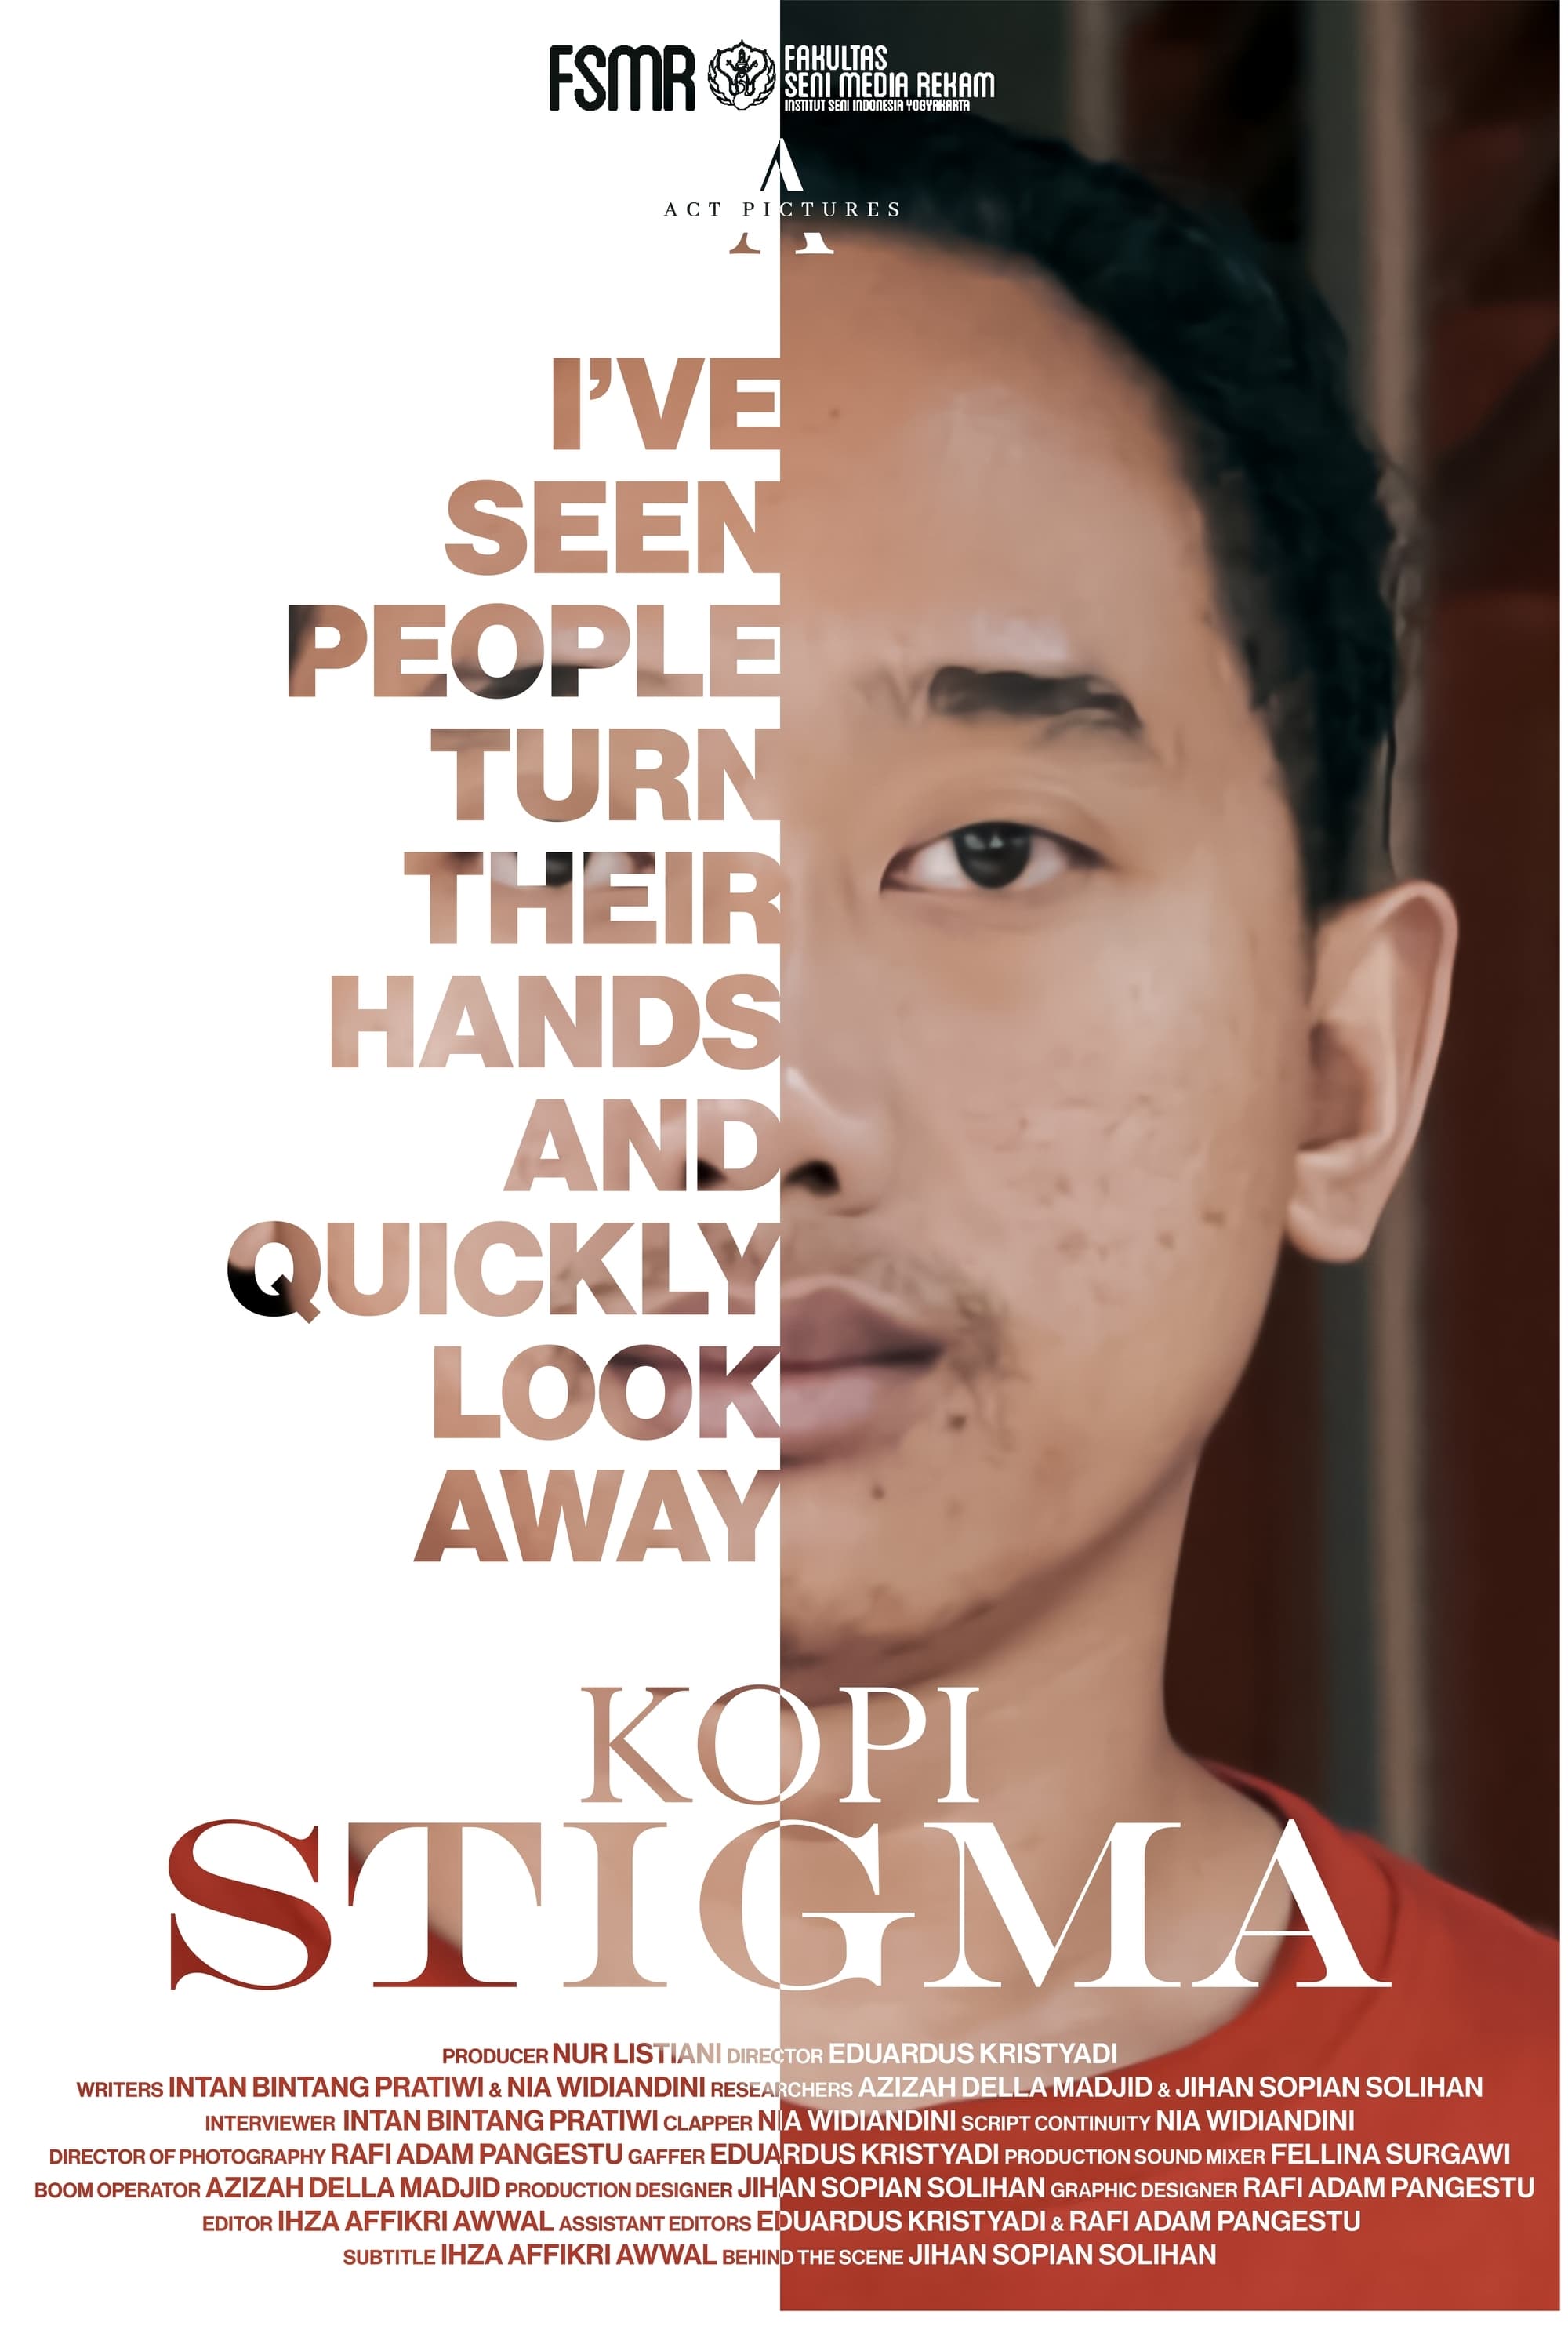 Stigma Coffee